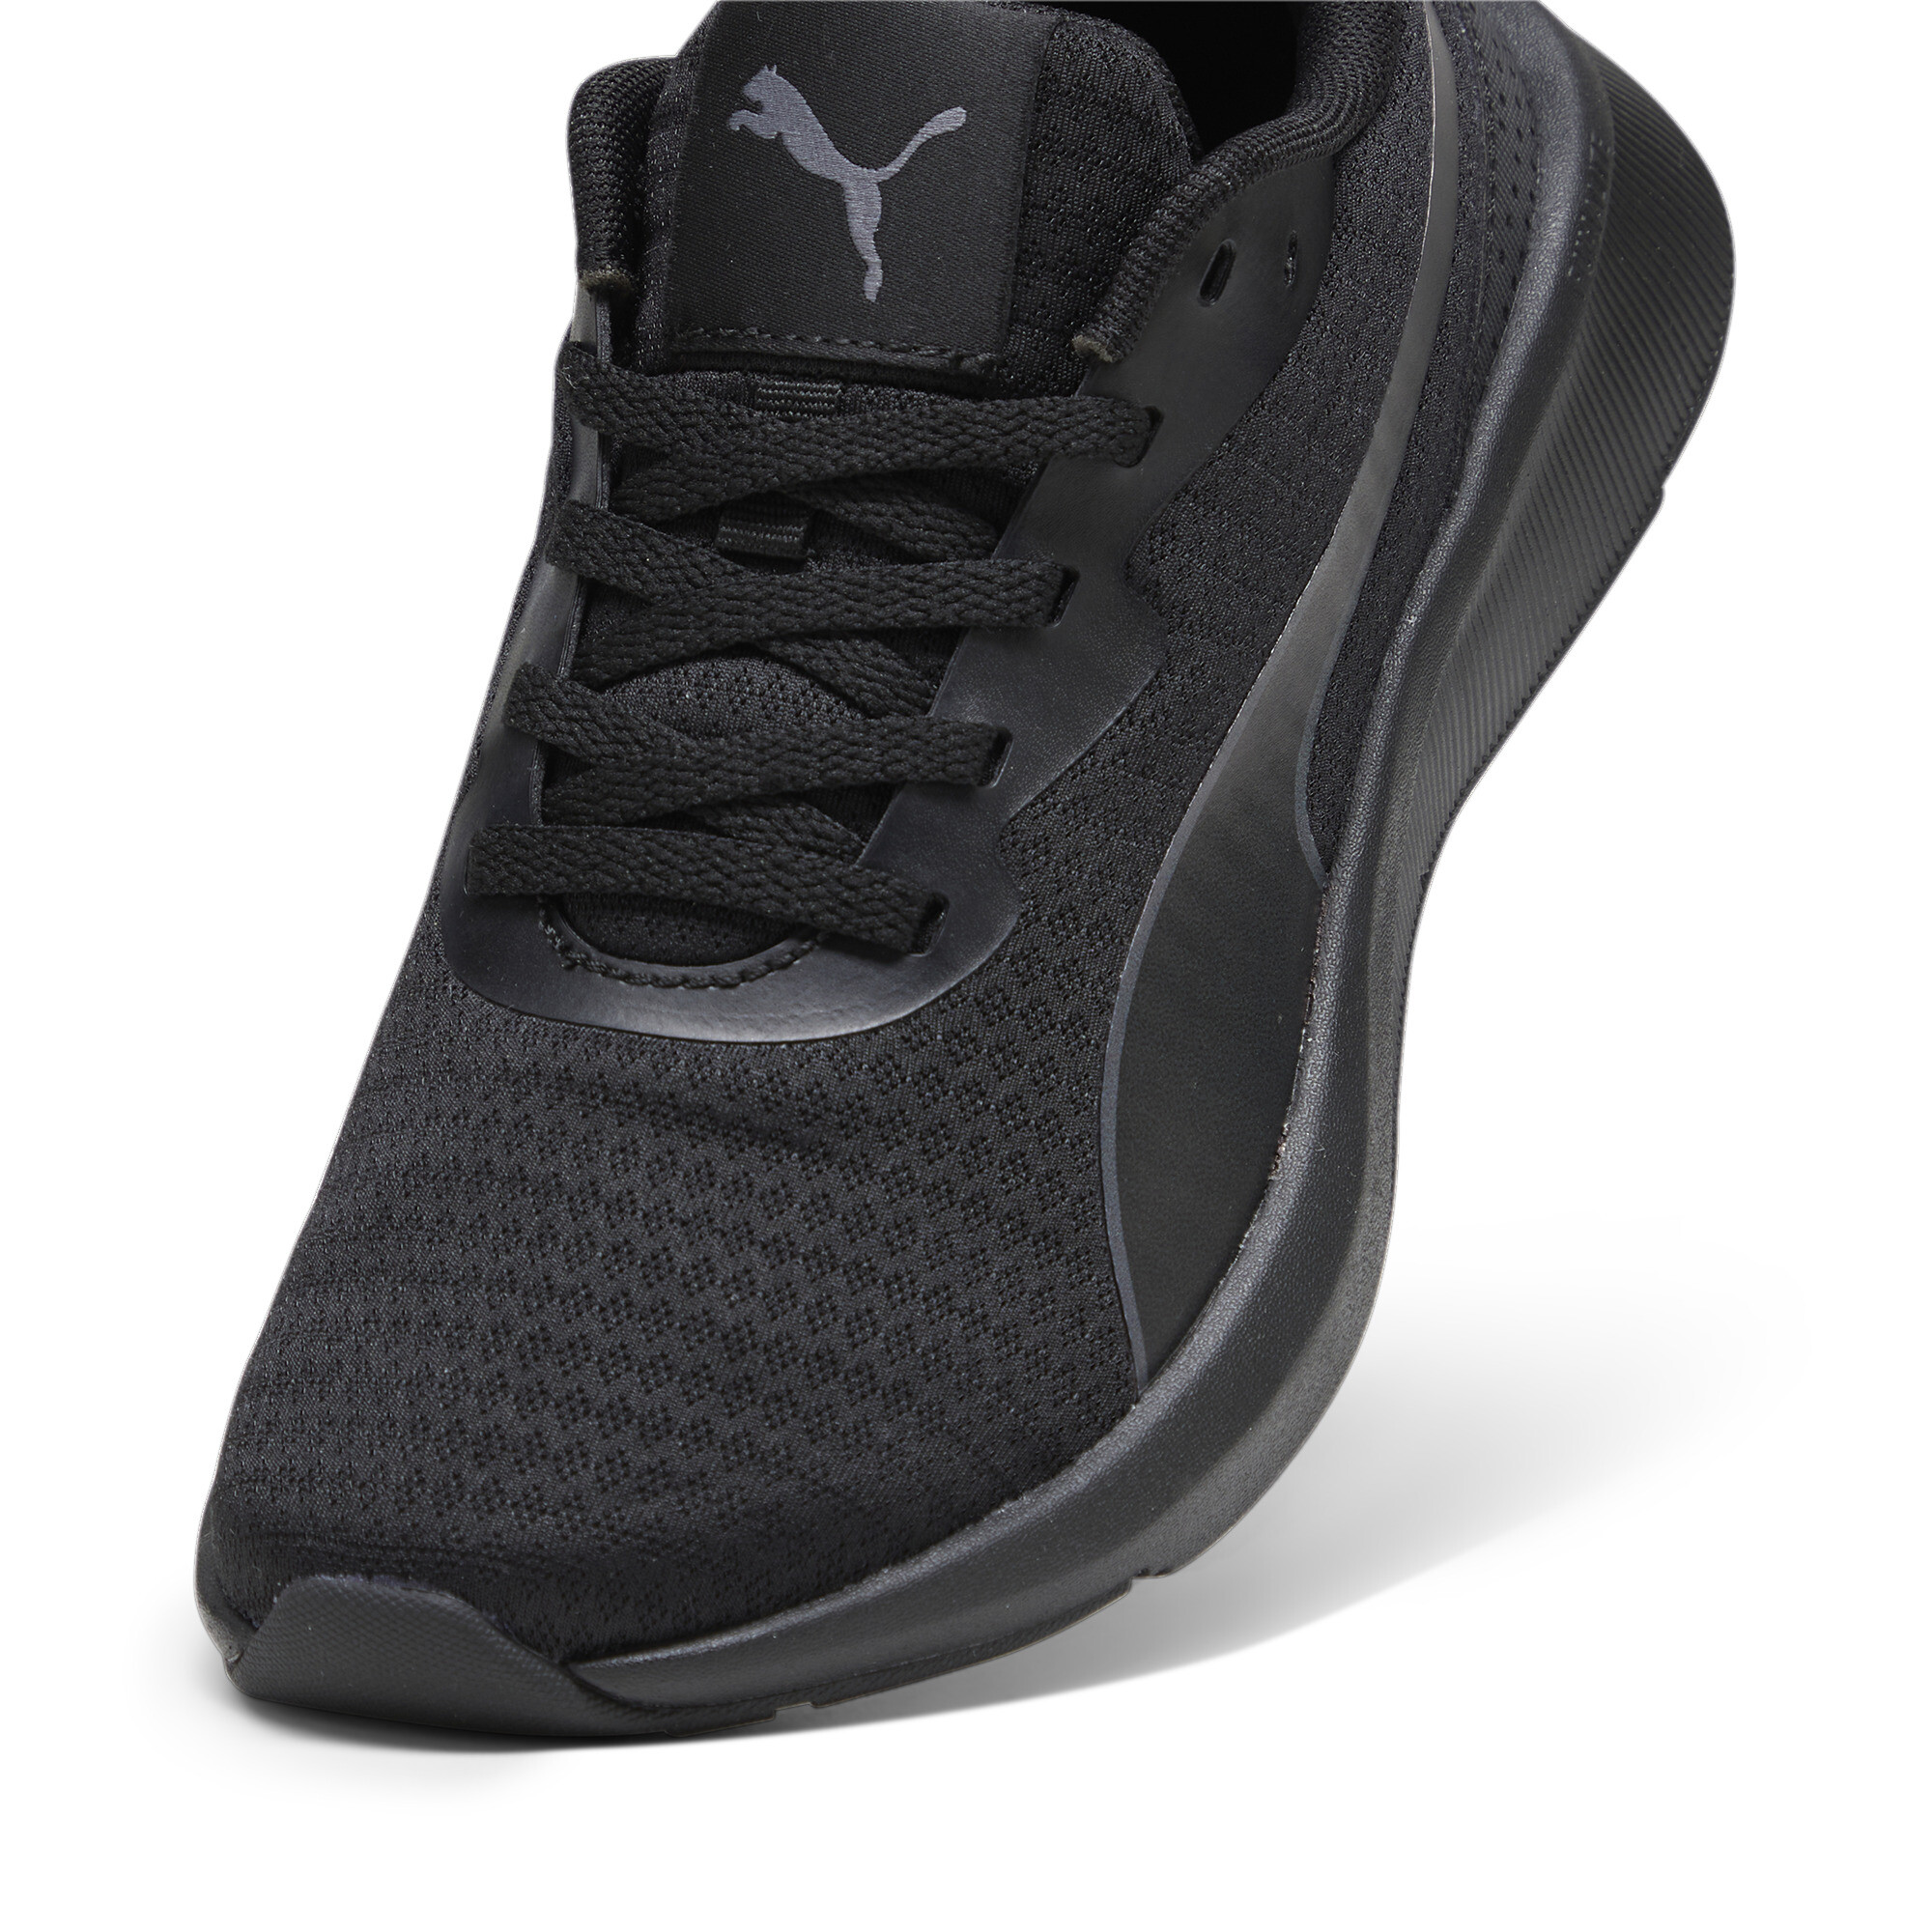 PUMA Flyer Lite Youth Sneakers In Black, Size EU 37.5